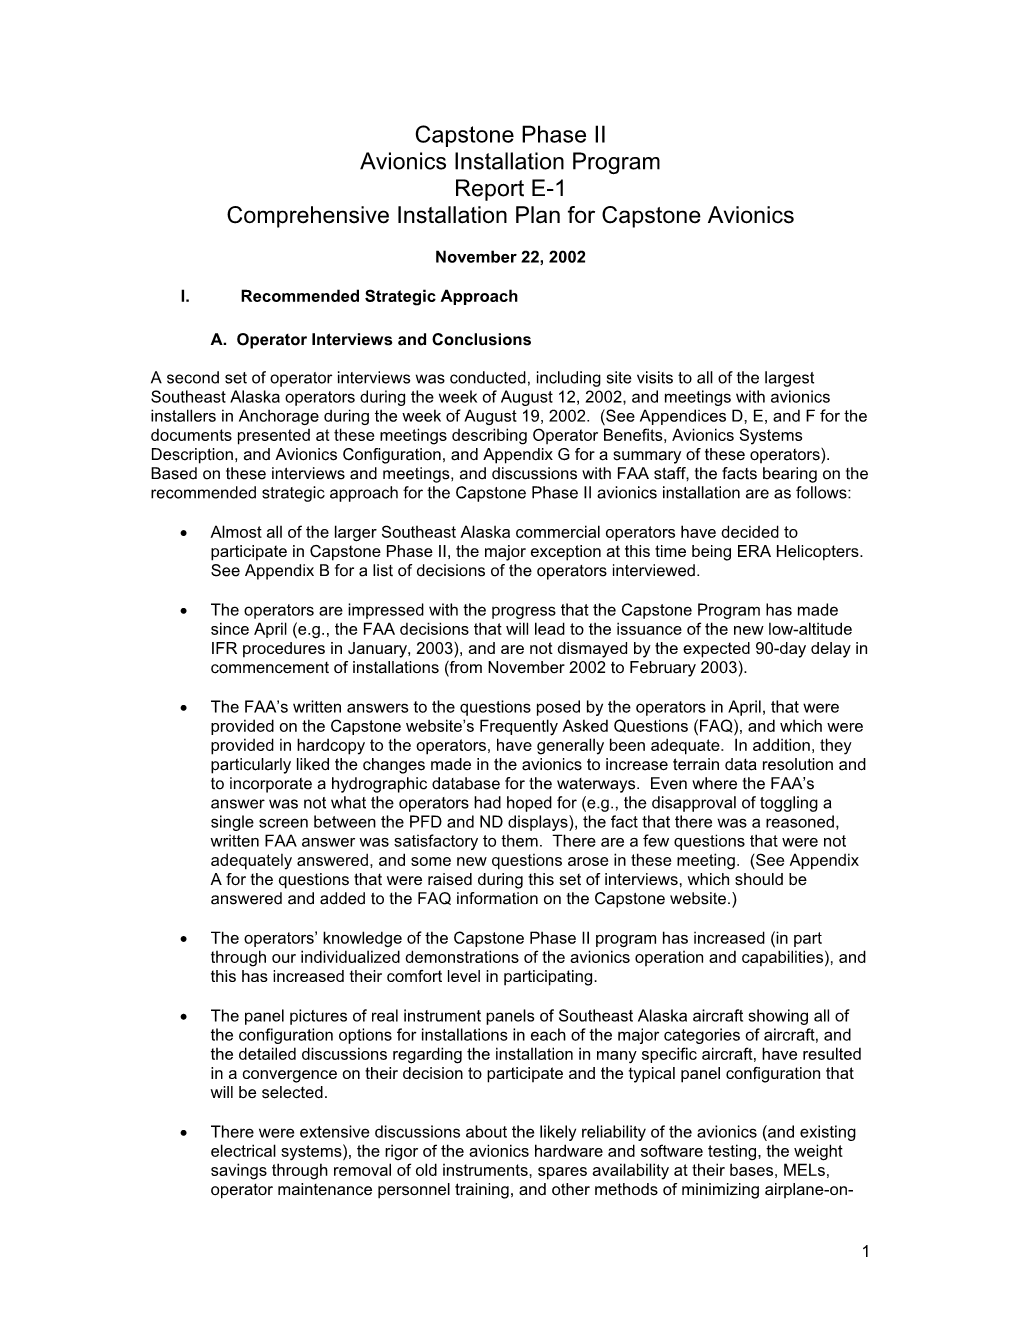 Capstone Phase II Avionics Installation Program Report E-1 Comprehensive Installation Plan for Capstone Avionics